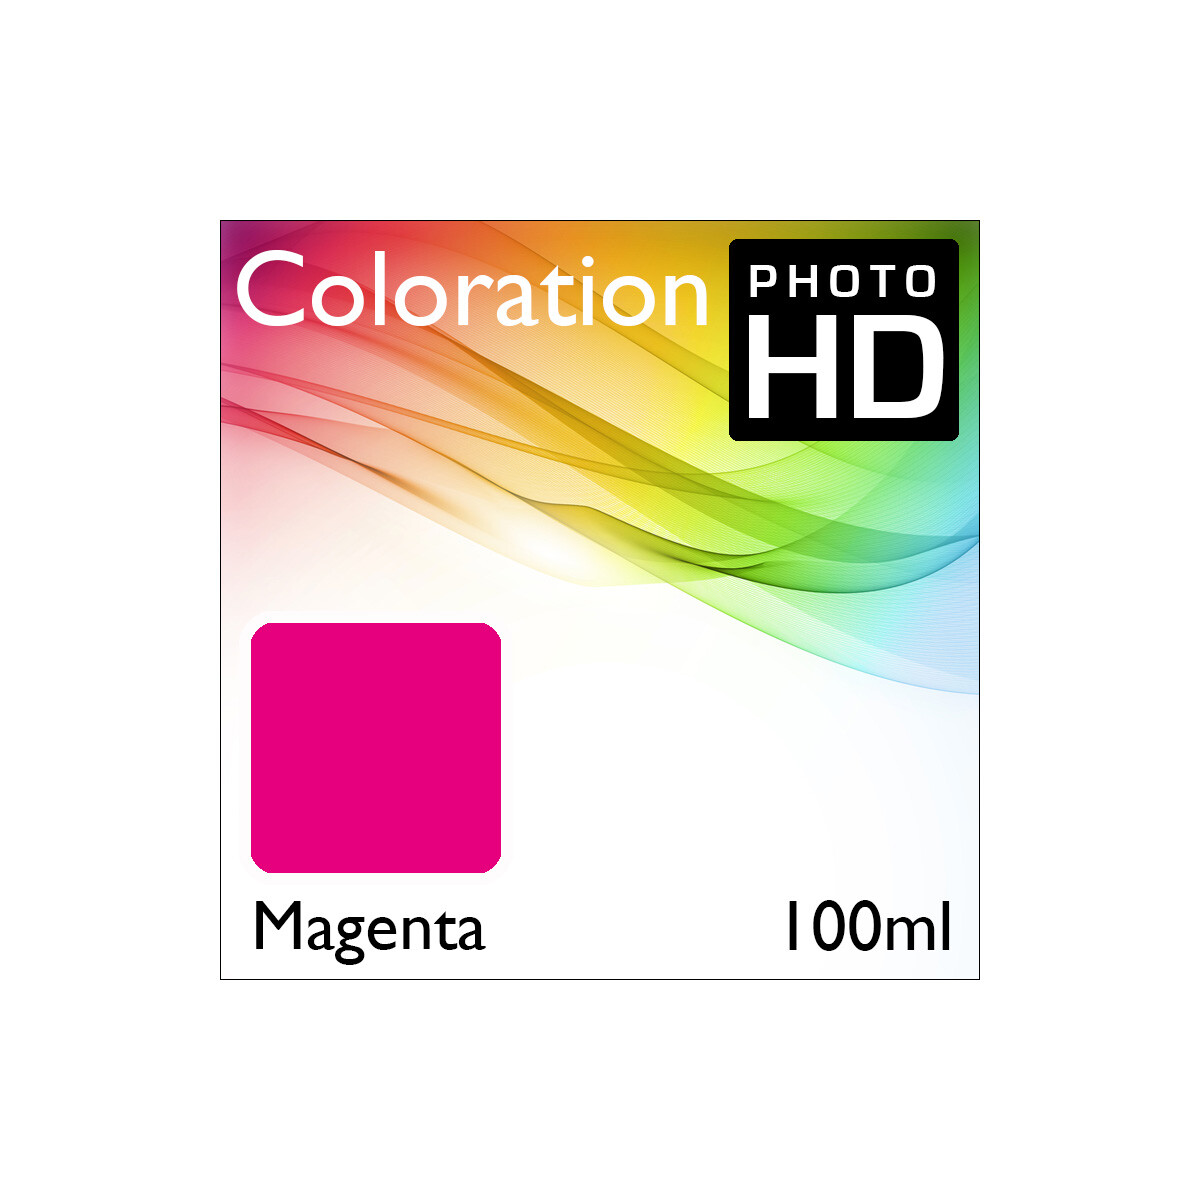 Coloration PhotoHD Bottle Magenta 100ml